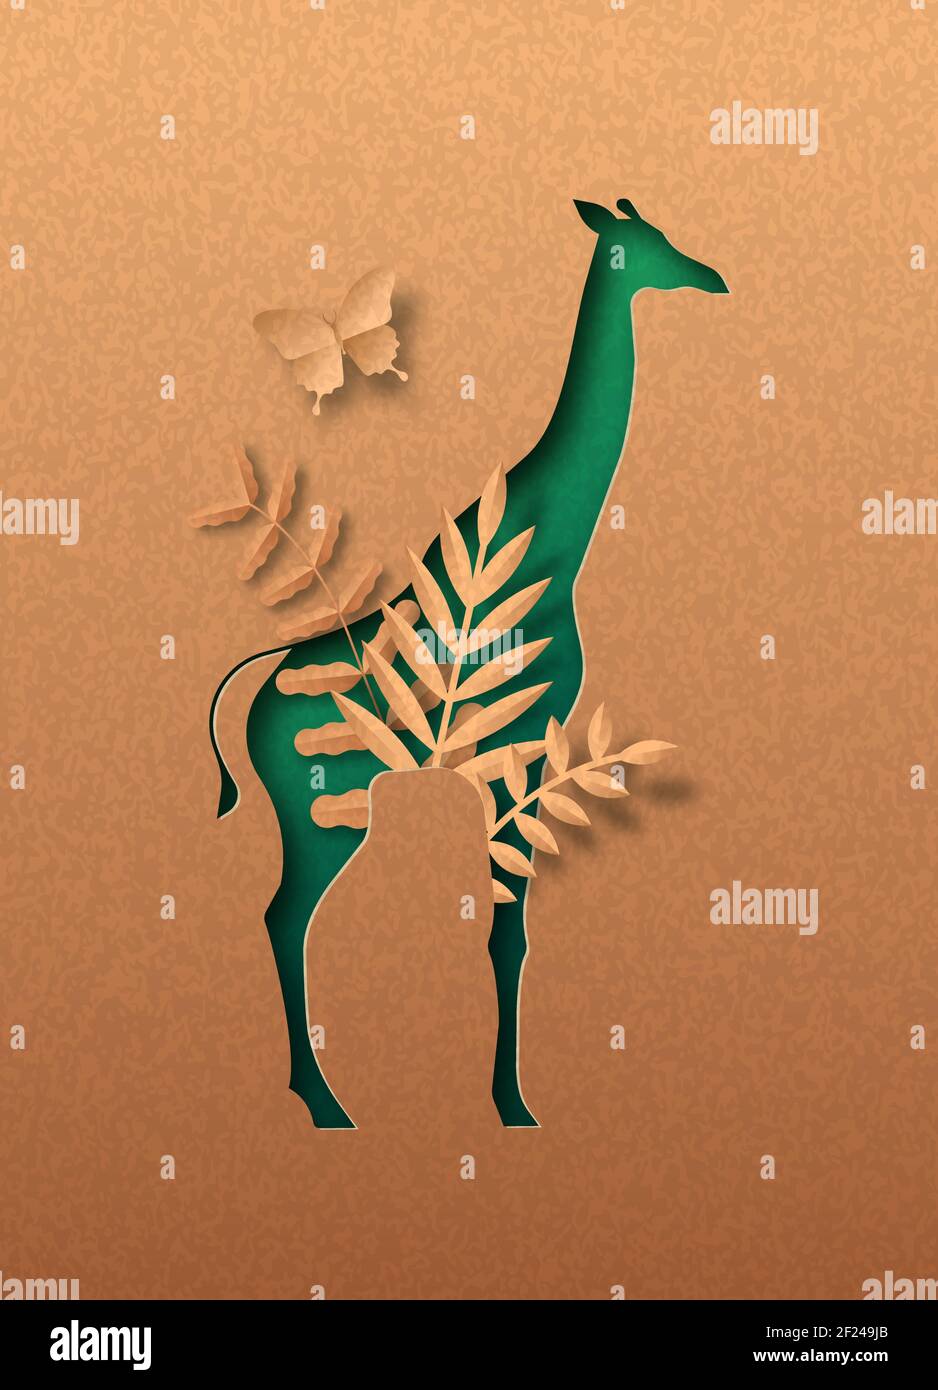 Grüne Giraffe Tier isoliert papercut Silhouette mit tropischen Pflanzen Blatt innen. Recycling Papier Textur Ausschnitt Konzept für afrika Safari, Tierwelt c Stock Vektor